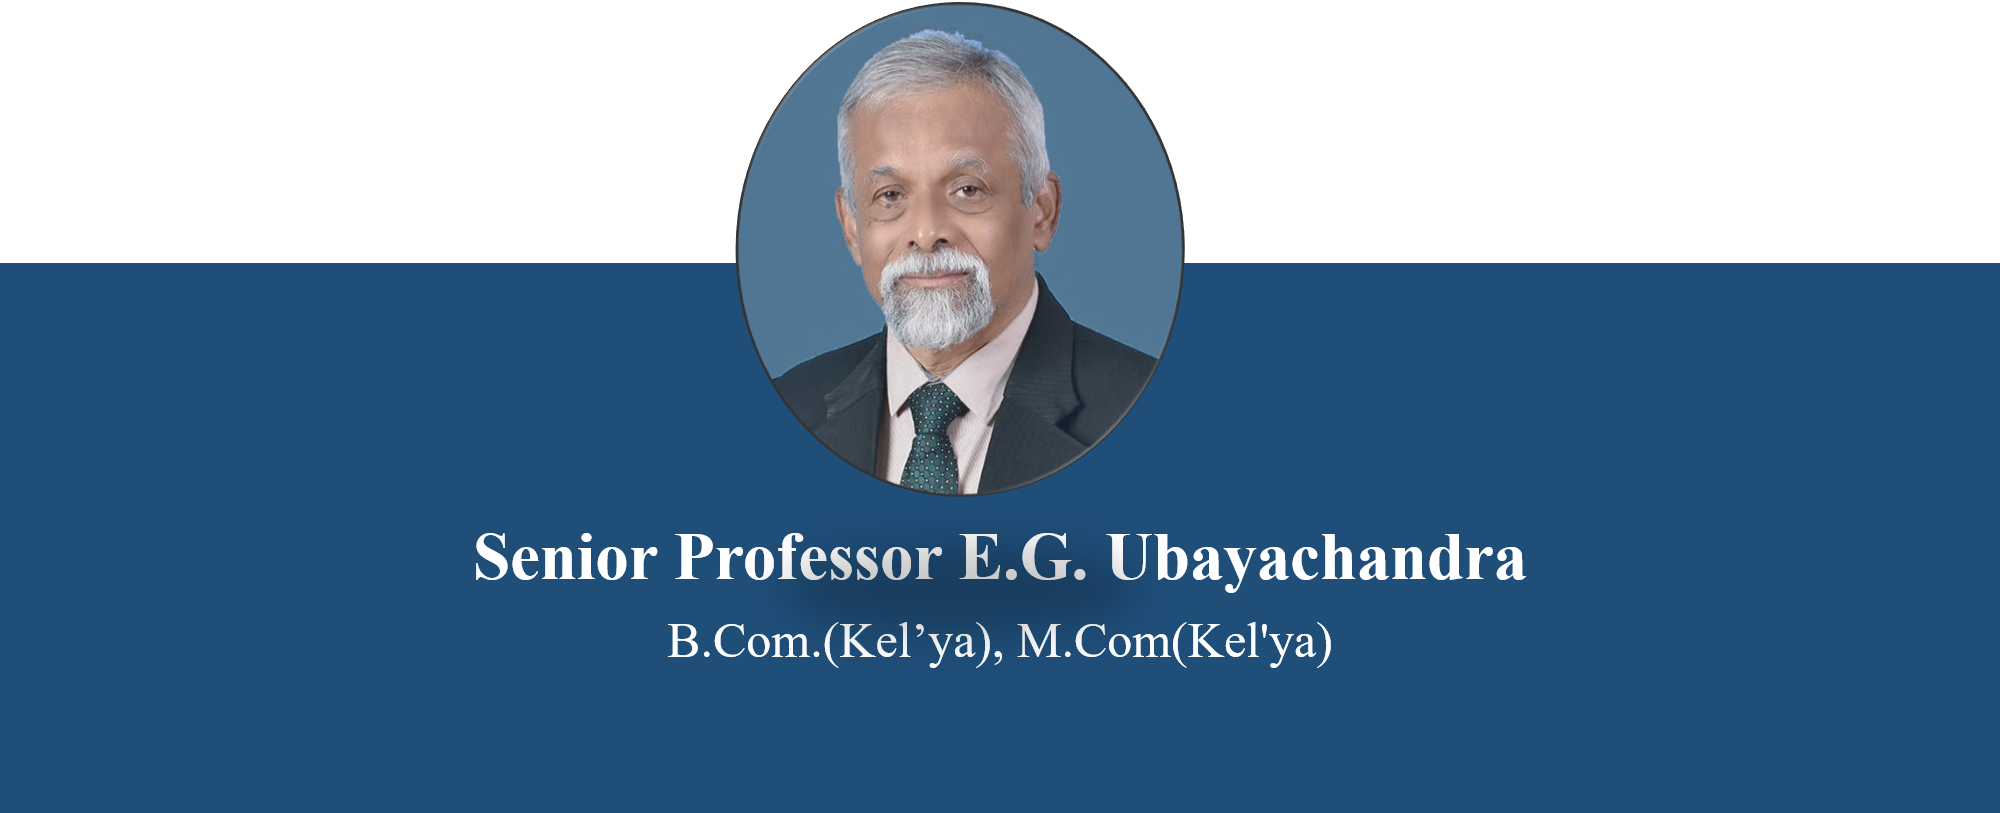 senior-profesor-eg-ubyachandra.png